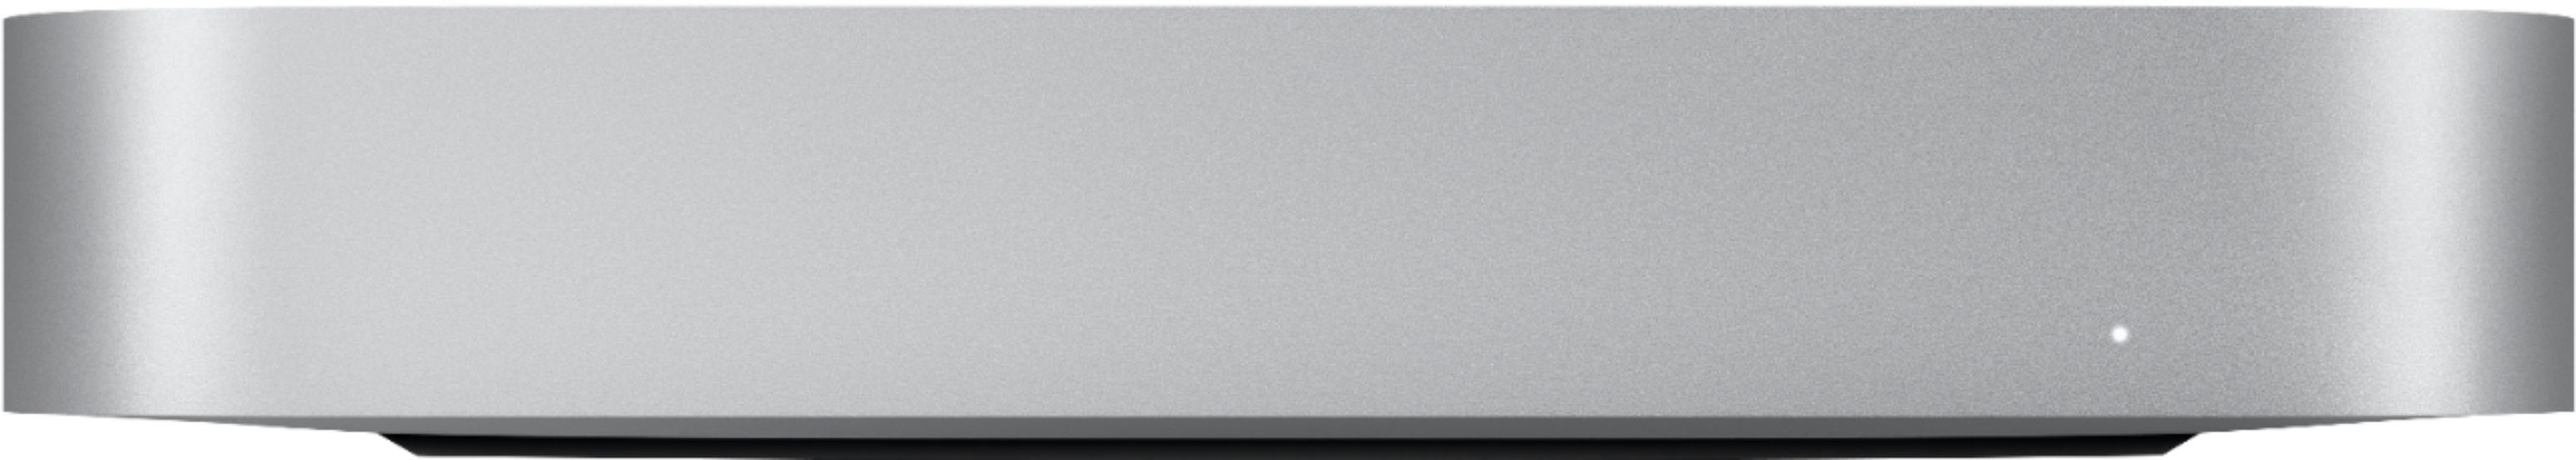 Mac mini Desktop Apple M1 chip 8GB Memory 256GB SSD (Latest Model) Silver  MGNR3LL/A - Best Buy